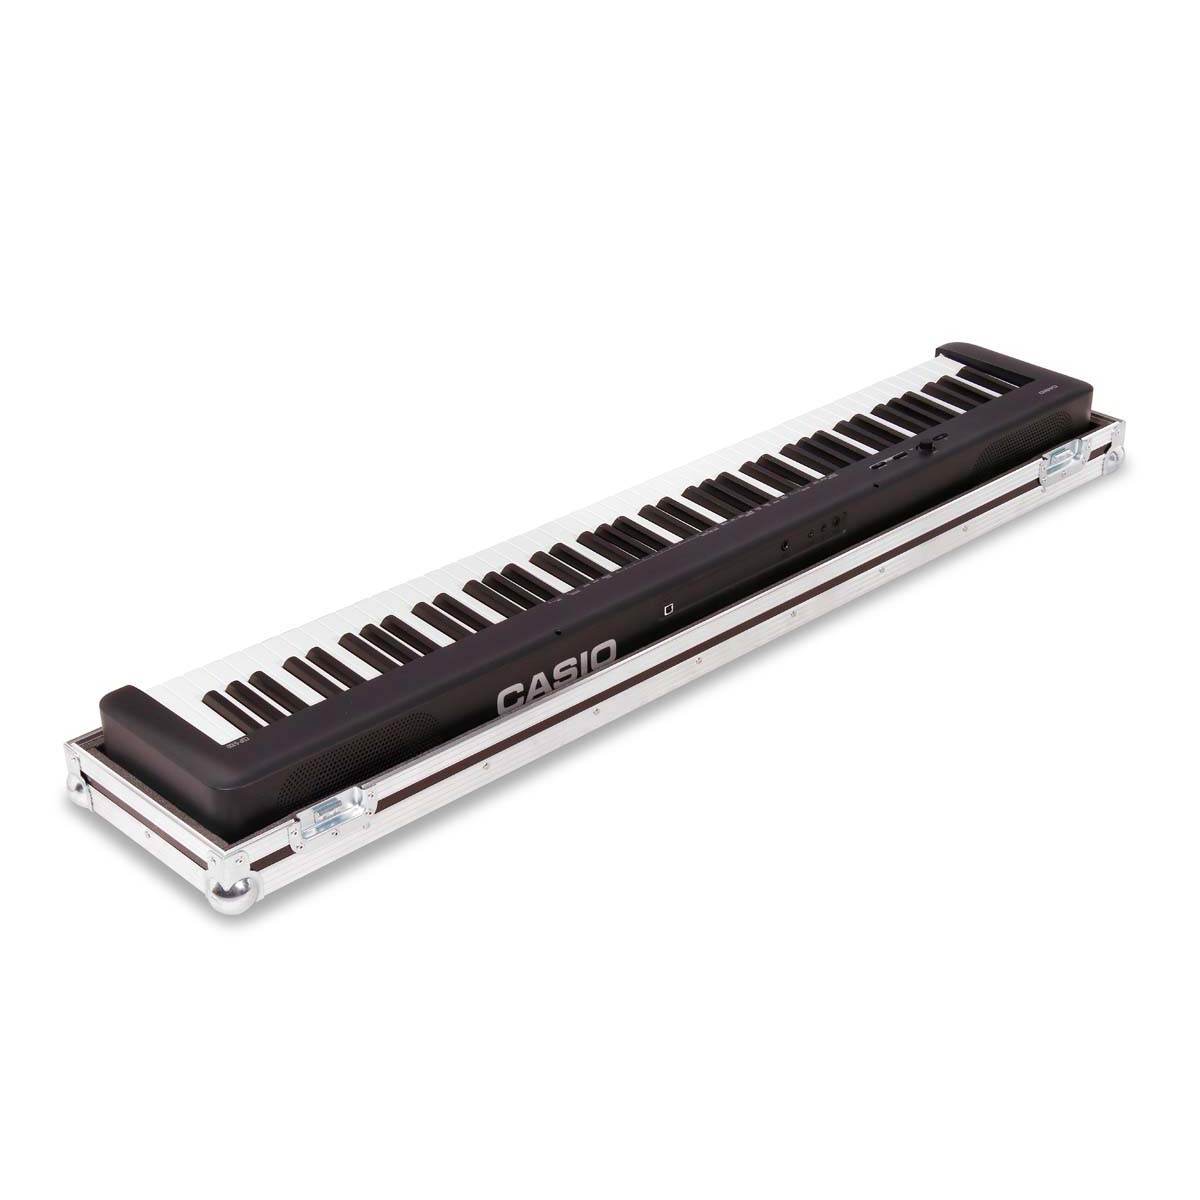 Keyboard Casio | Megacase